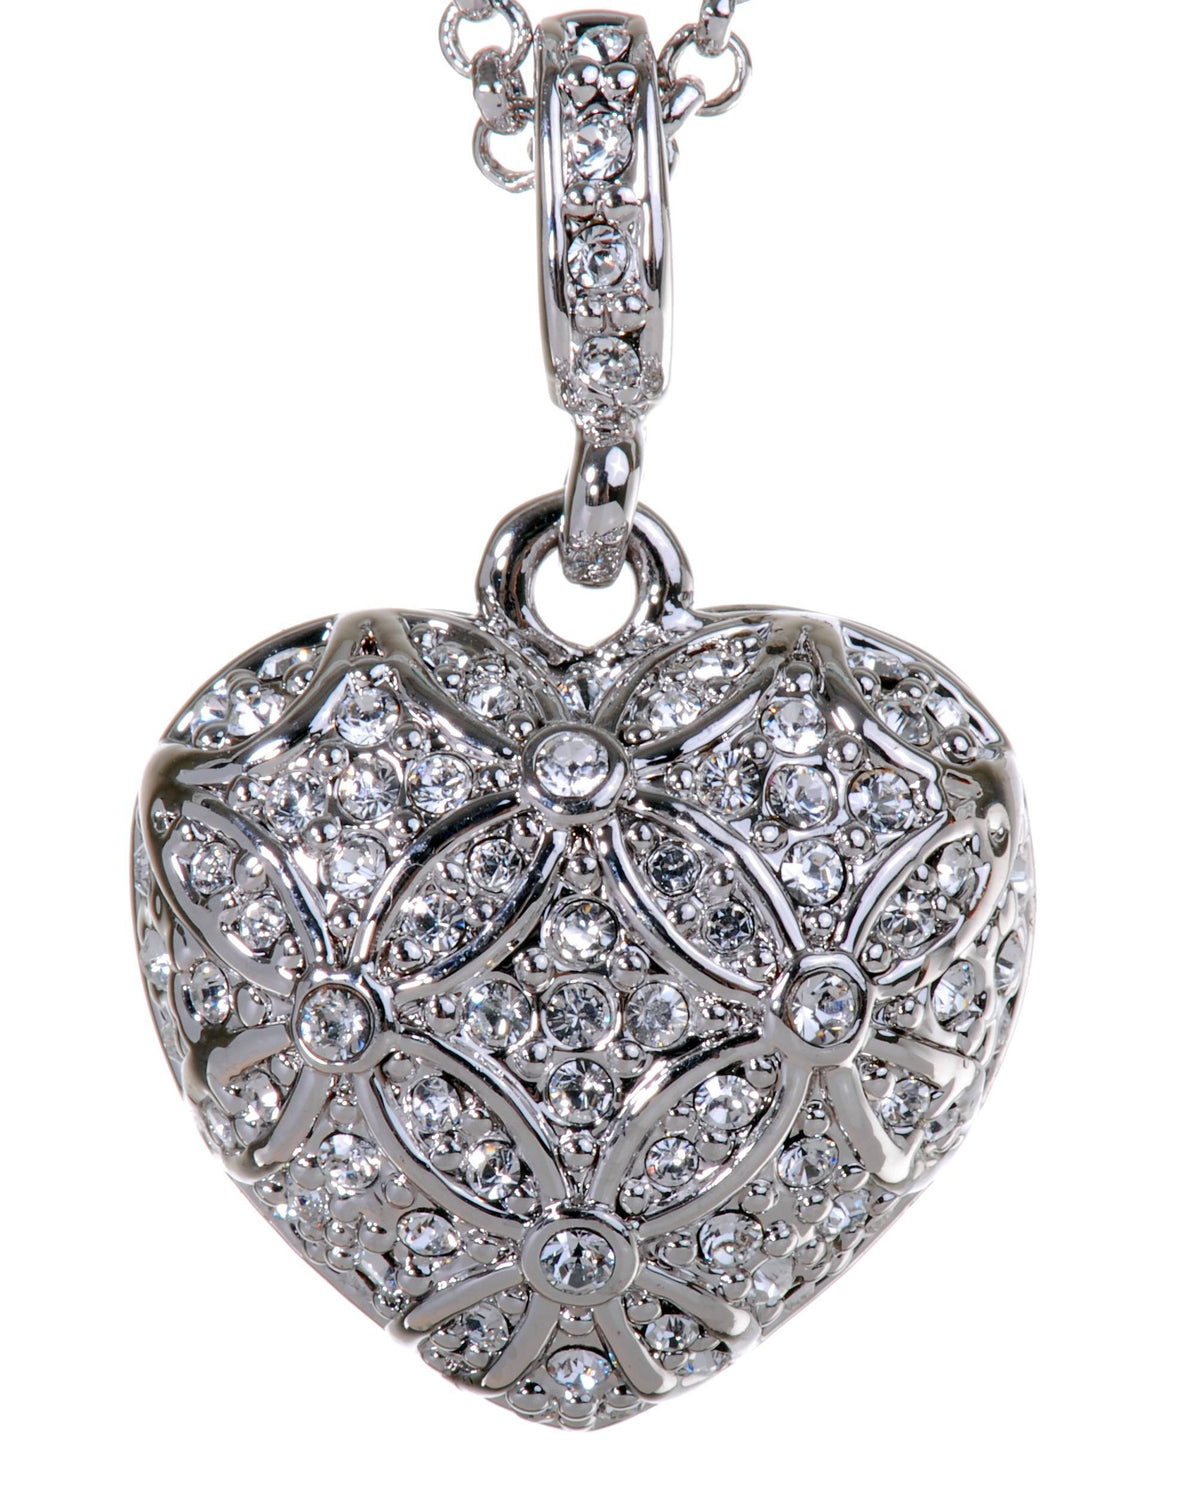 N7122 Rhodium Swarovski Heart Pendant Necklace Crystal